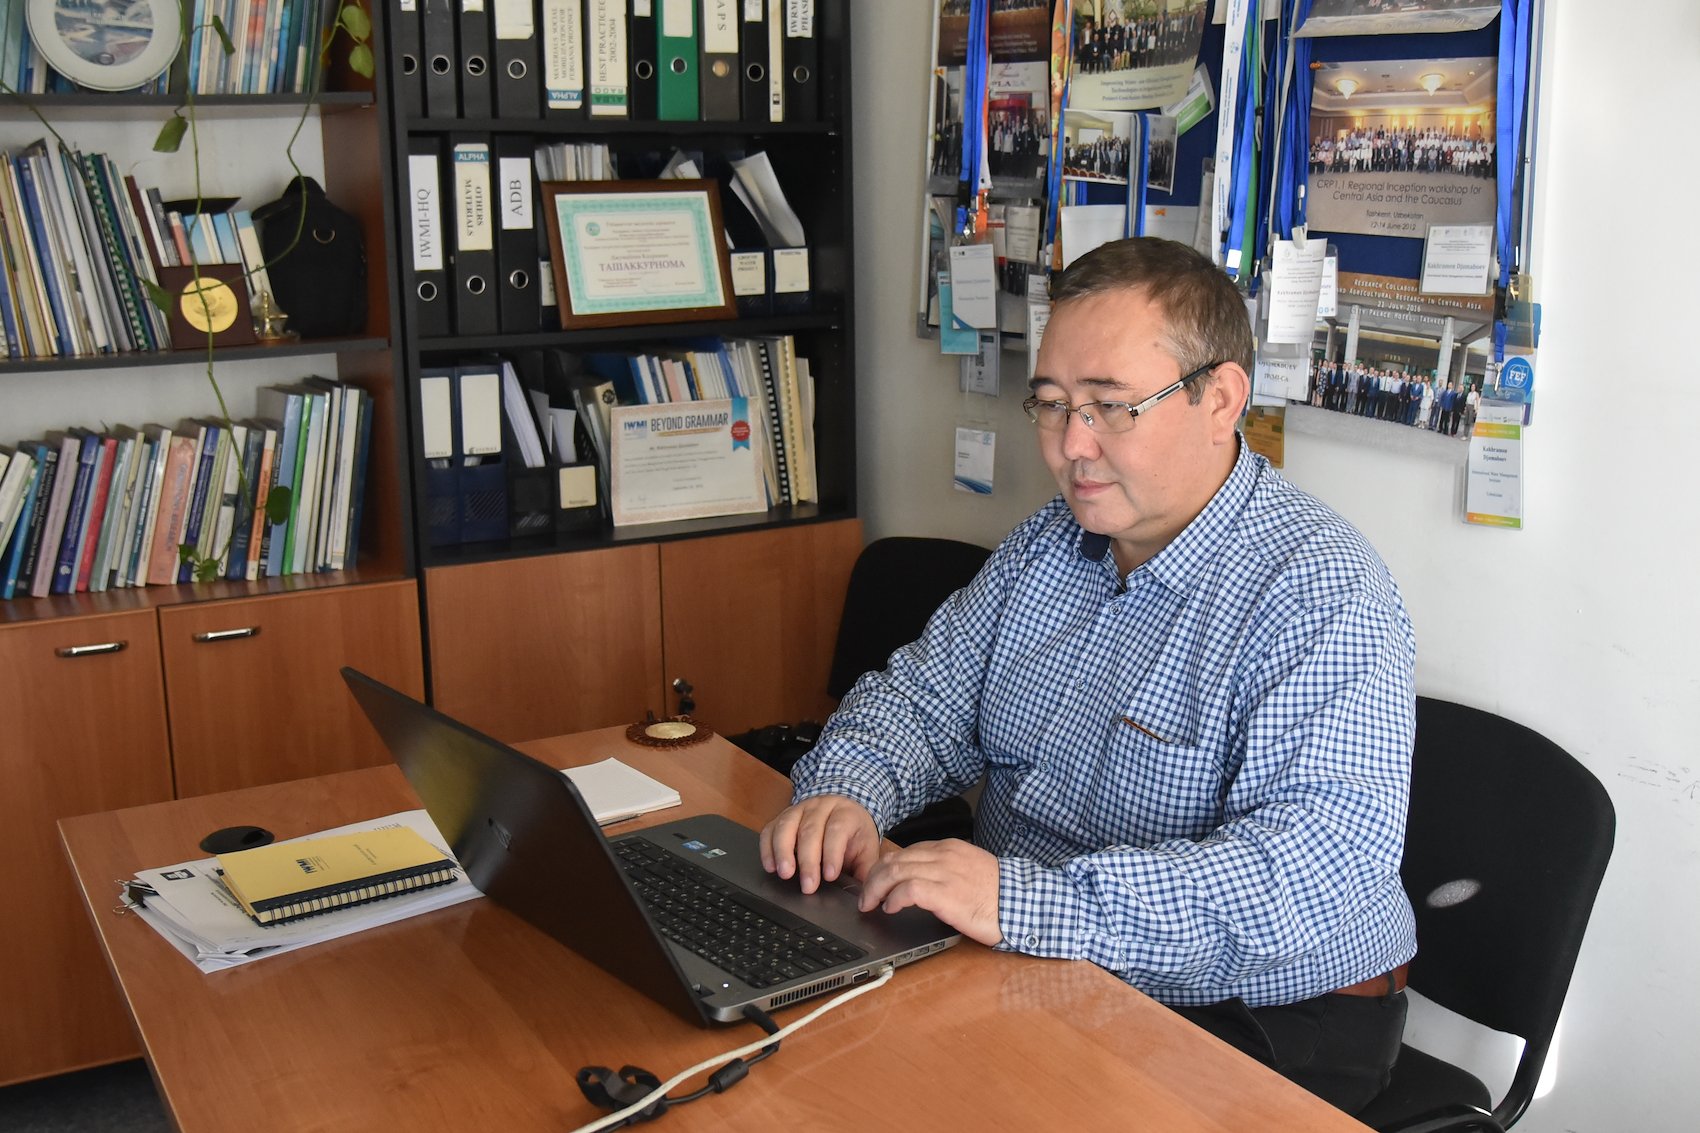 Kakhram Djumaboev at his office. Photo: Sanobar Khudaybergenova for USAID